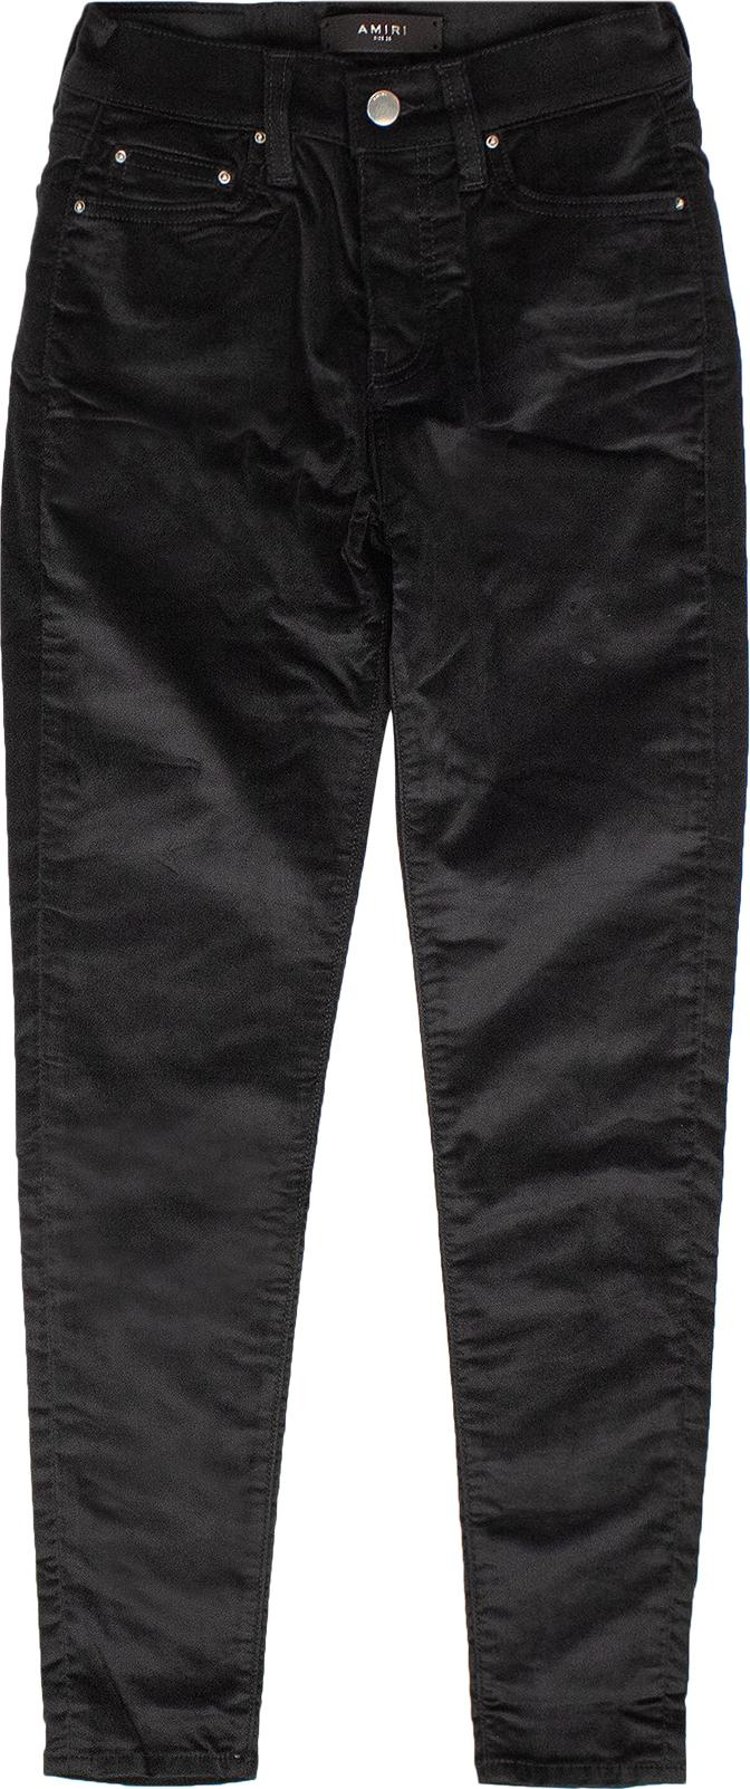 Buy Amiri Skinny Stack Pants 'Black' - WPS001 001 BLAC | GOAT